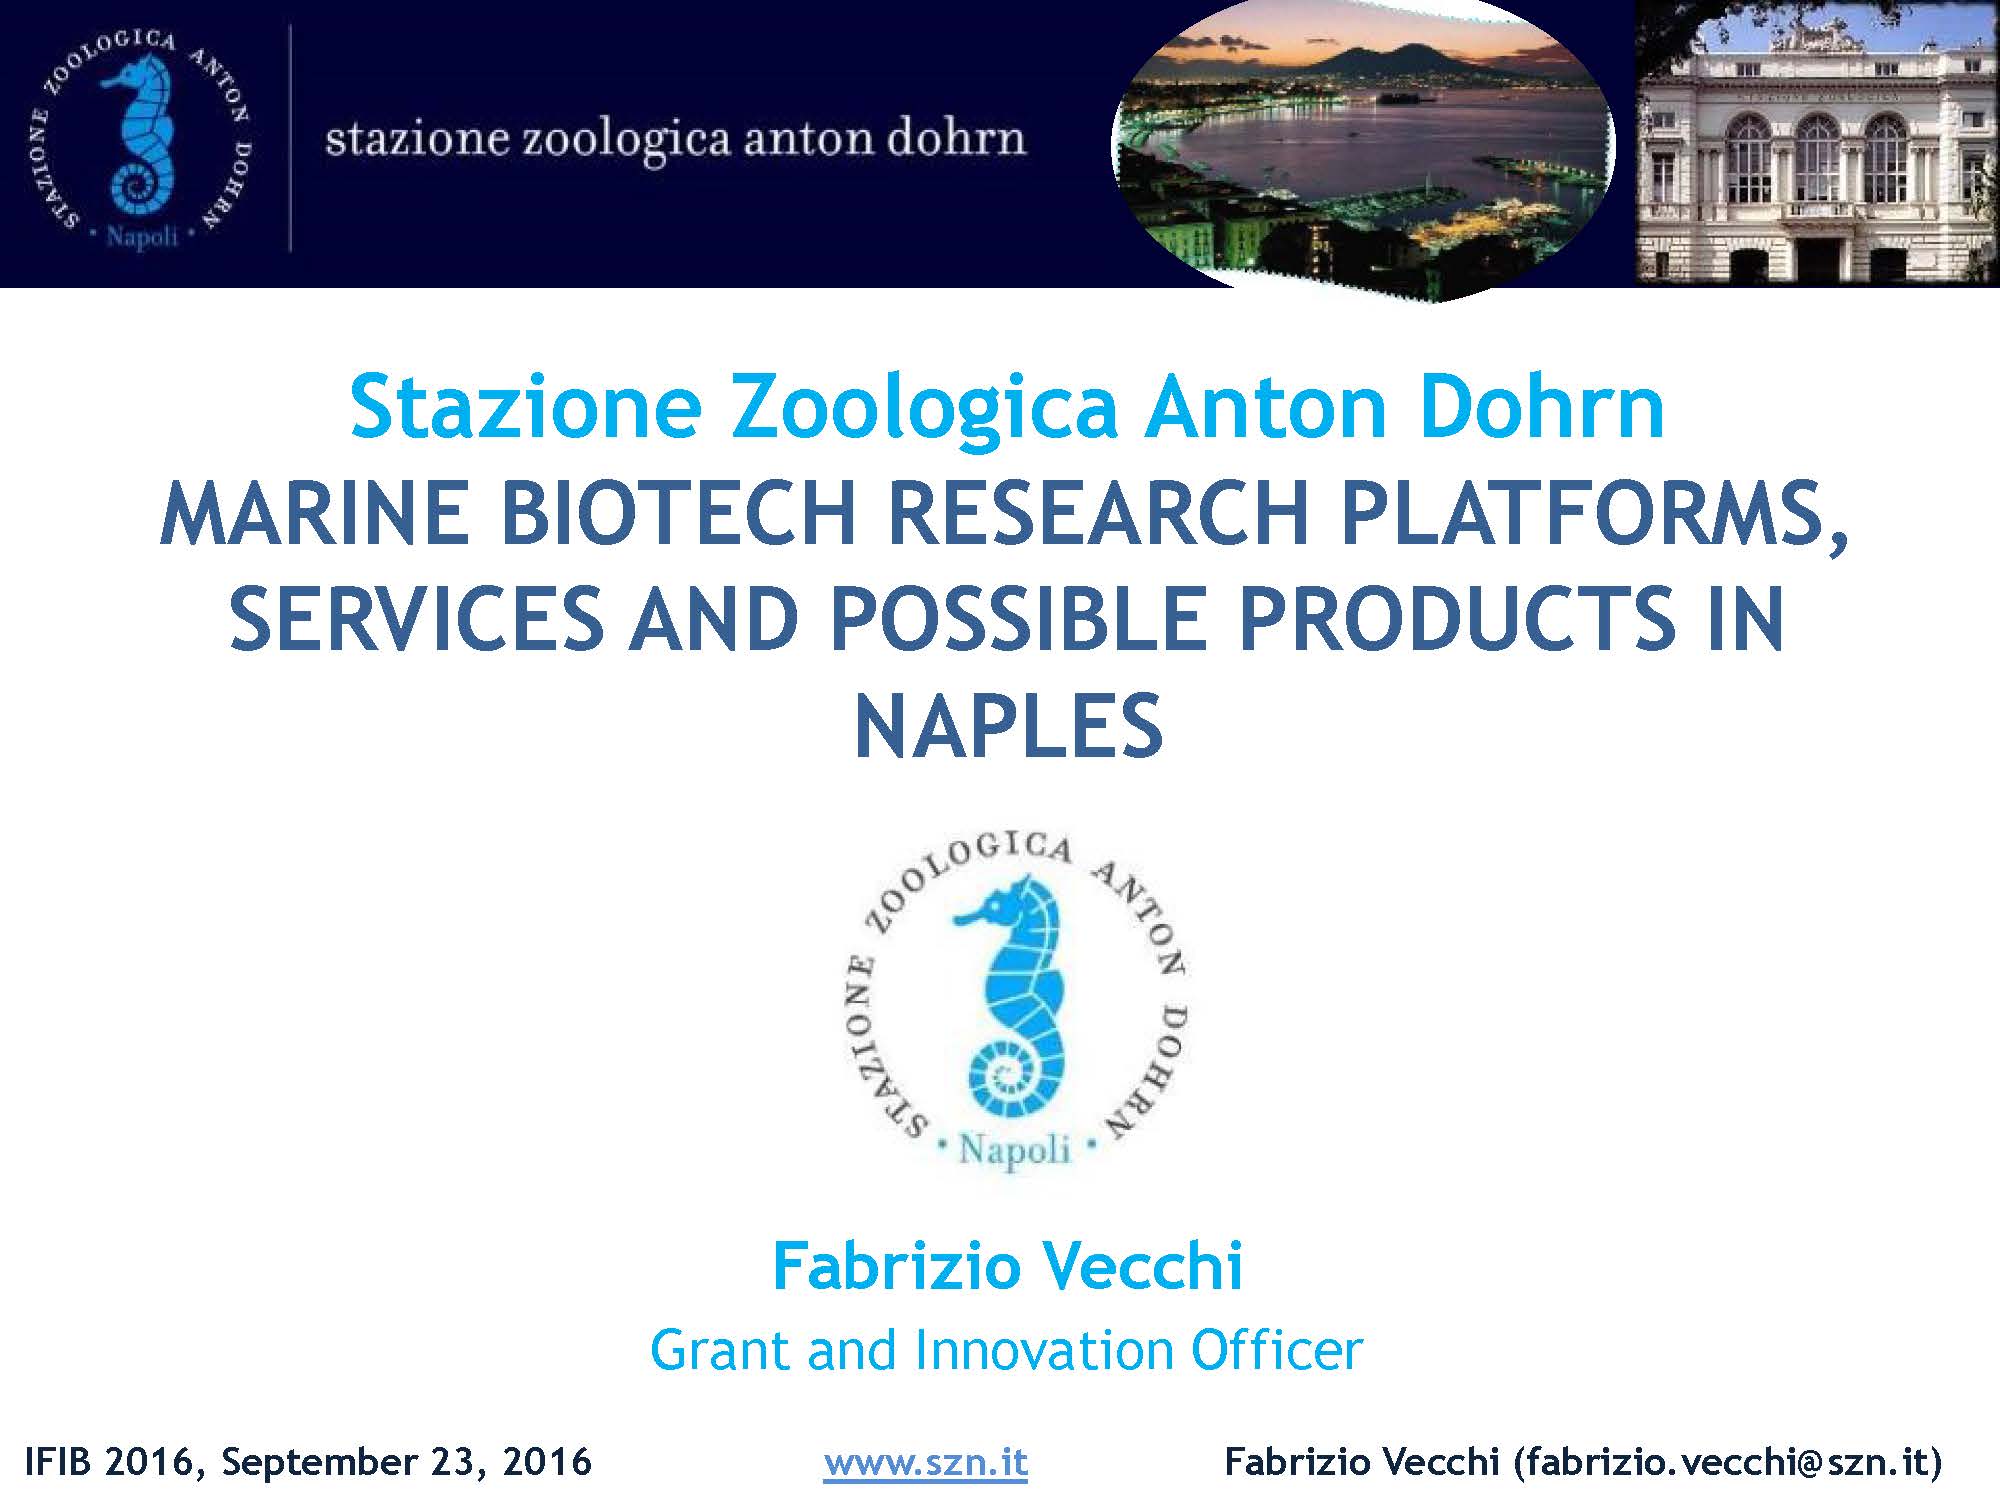 Marine Biotech Research Platforms